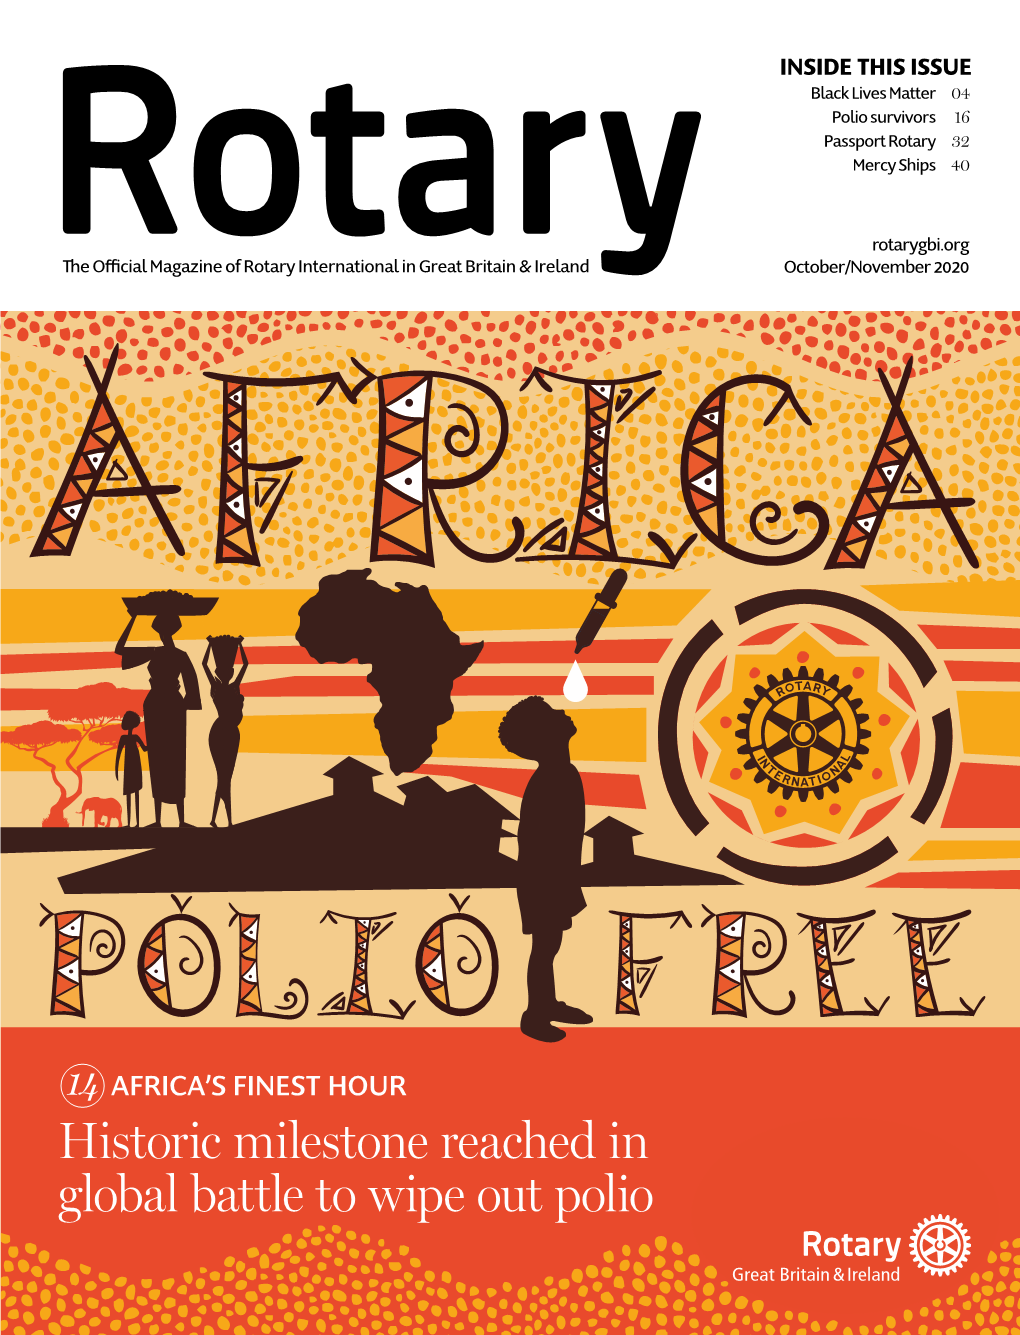 Polio Survivors 16 Passport Rotary 32 Mercy Ships 40